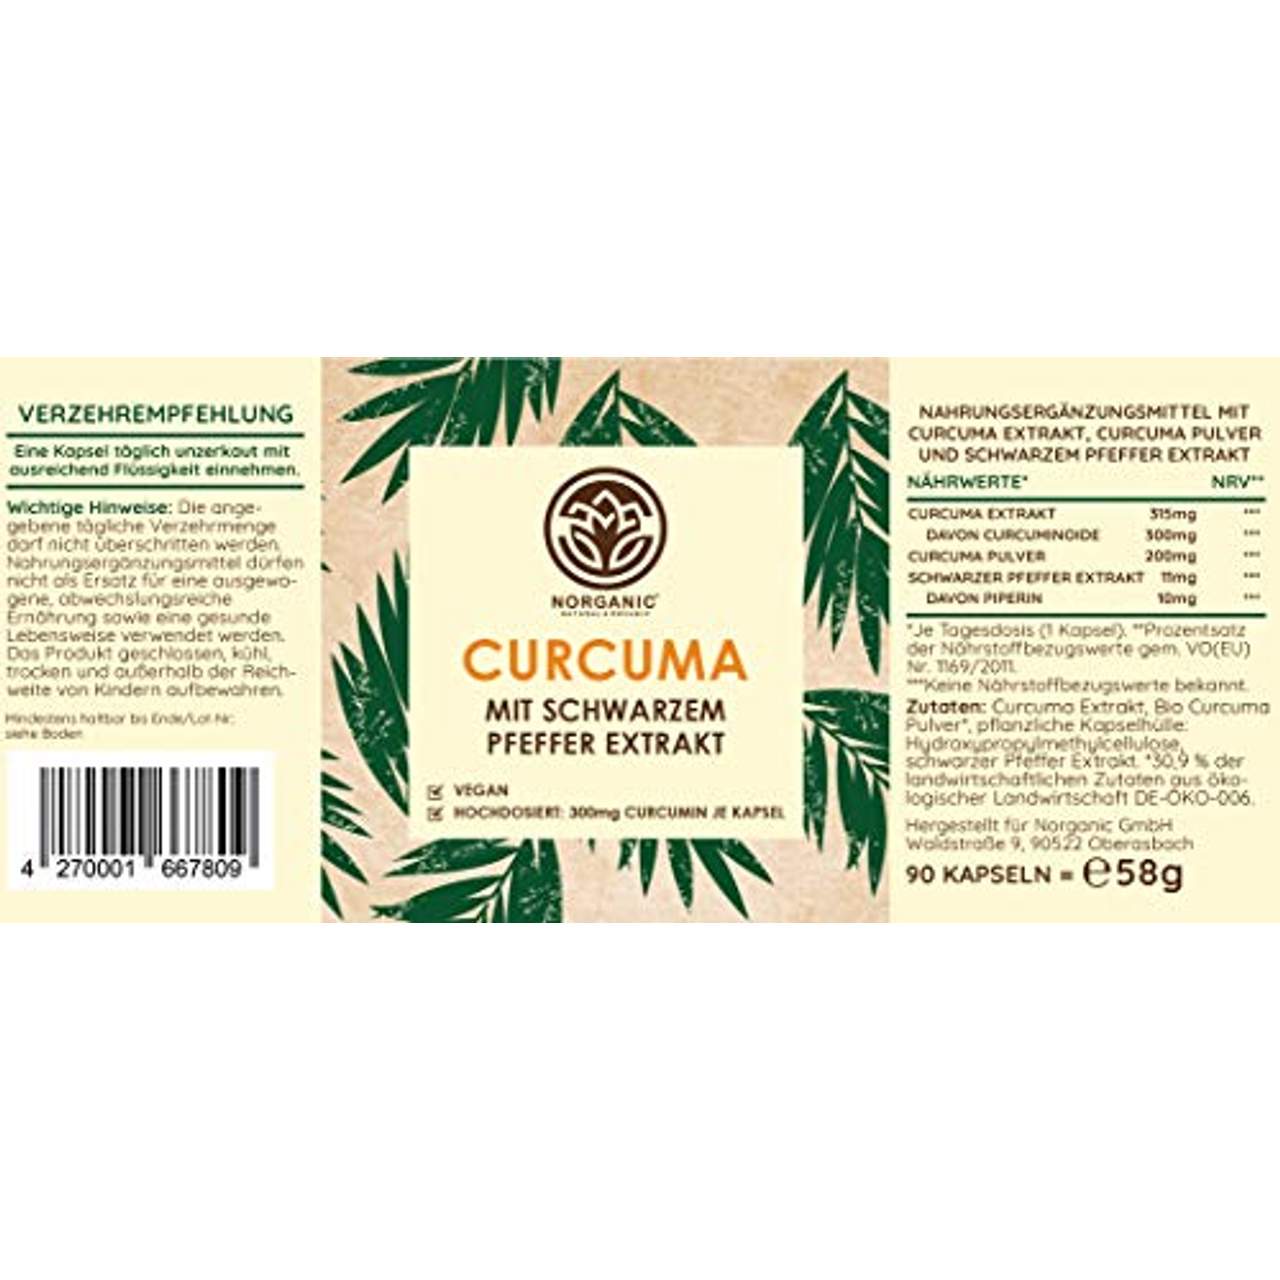 Norganic Curcuma Extrakt Kapseln